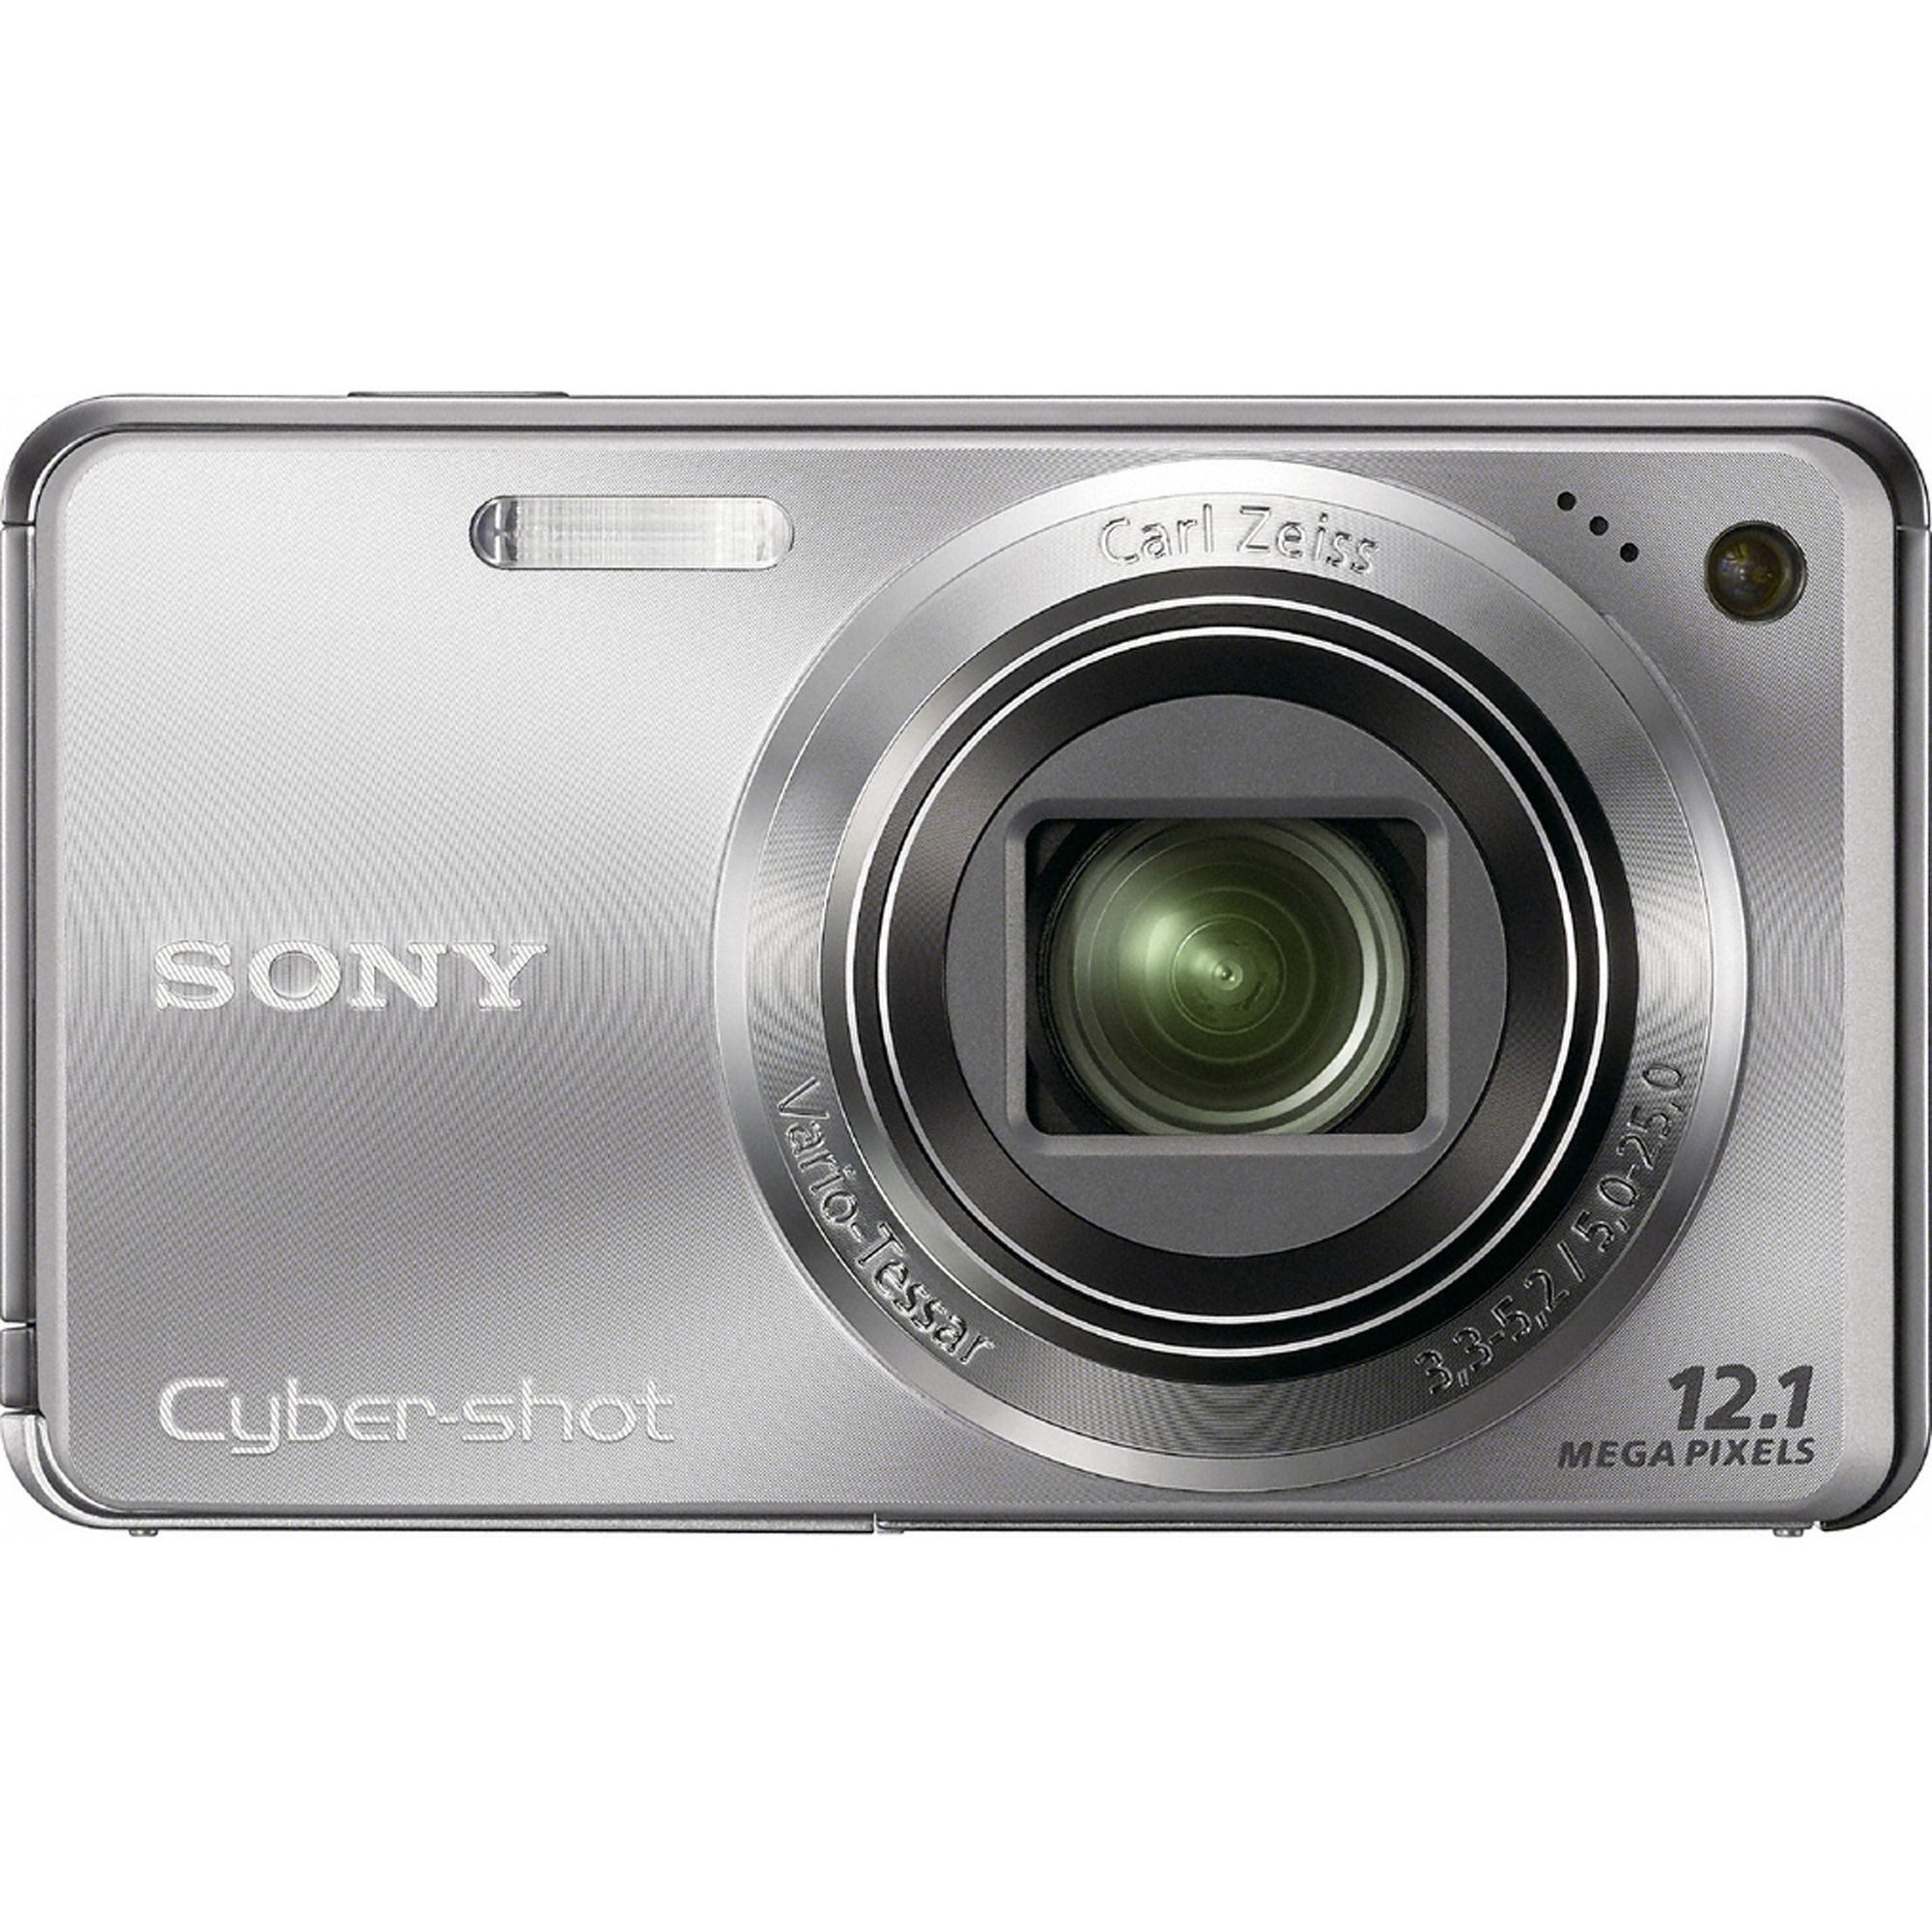 Sony DSCW290 Cyber-shot® 12.1 Megapixel 5X Optical Zoom Digital Camera